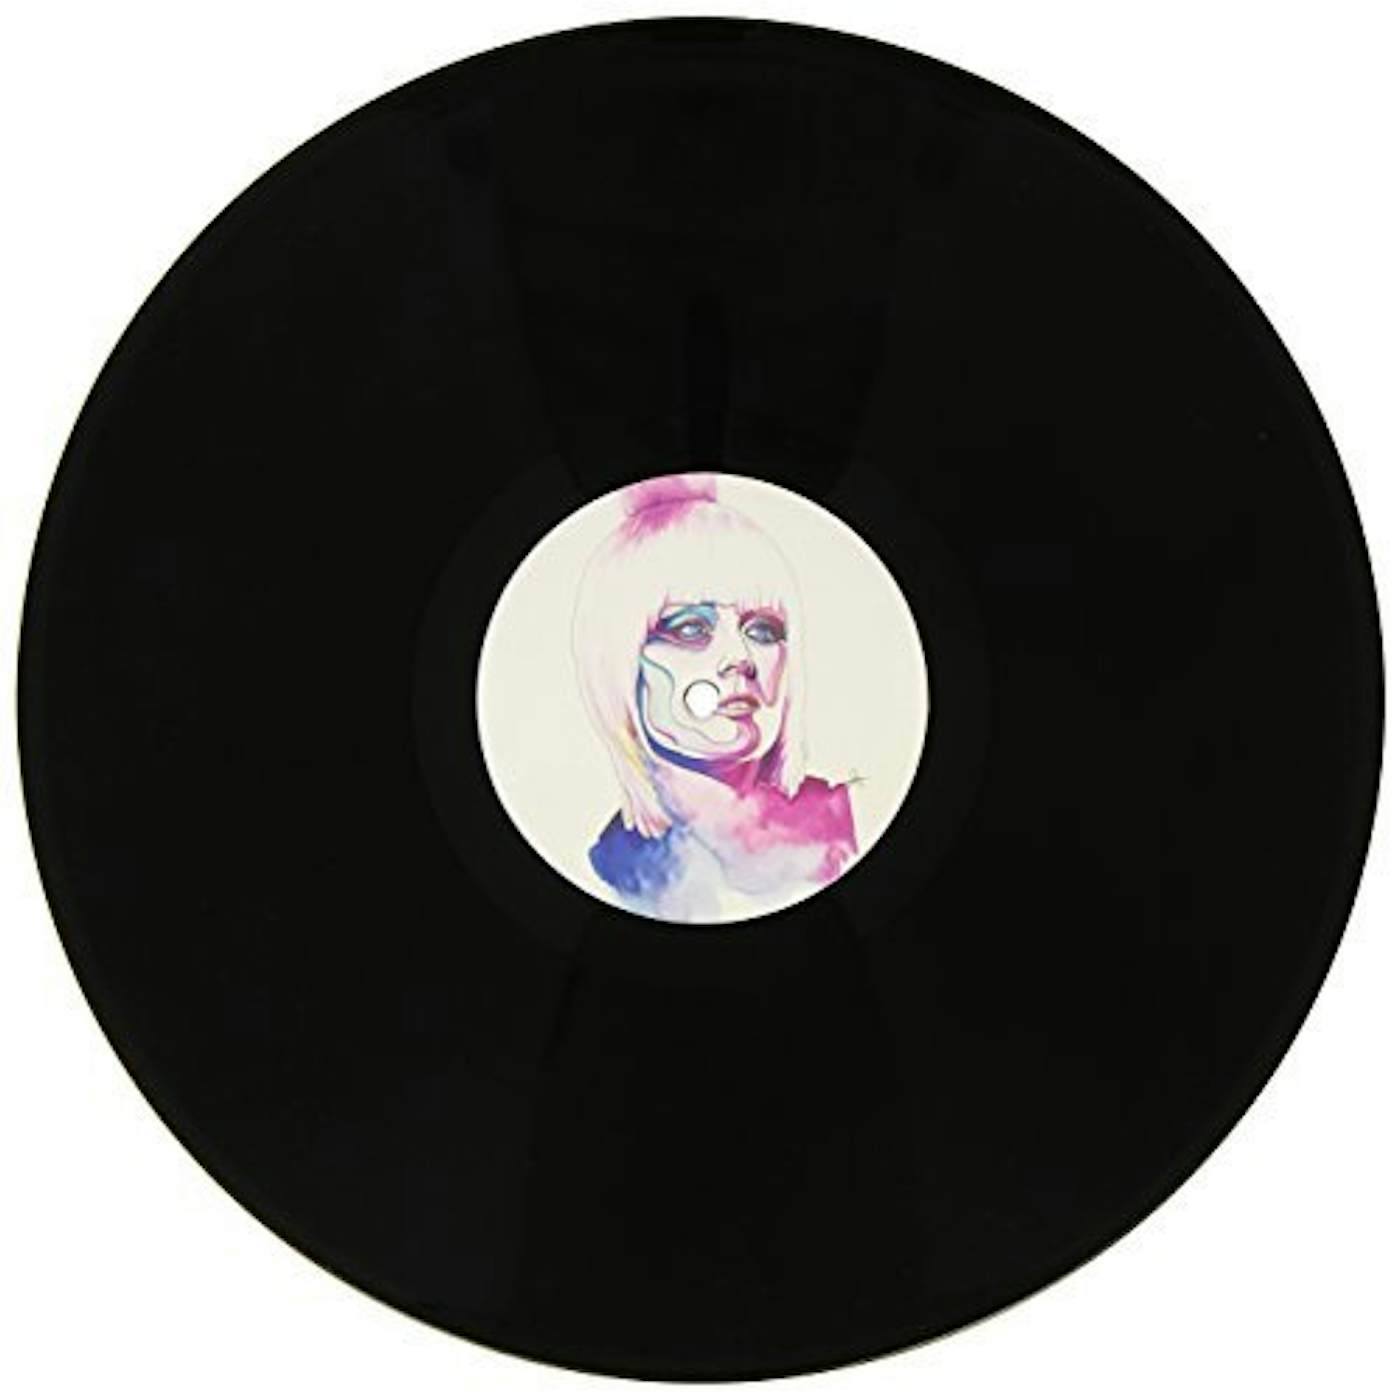 Róisín Murphy HOUSE OF GLASS (MAURICE FULTON REMIX) Vinyl Record - UK Release